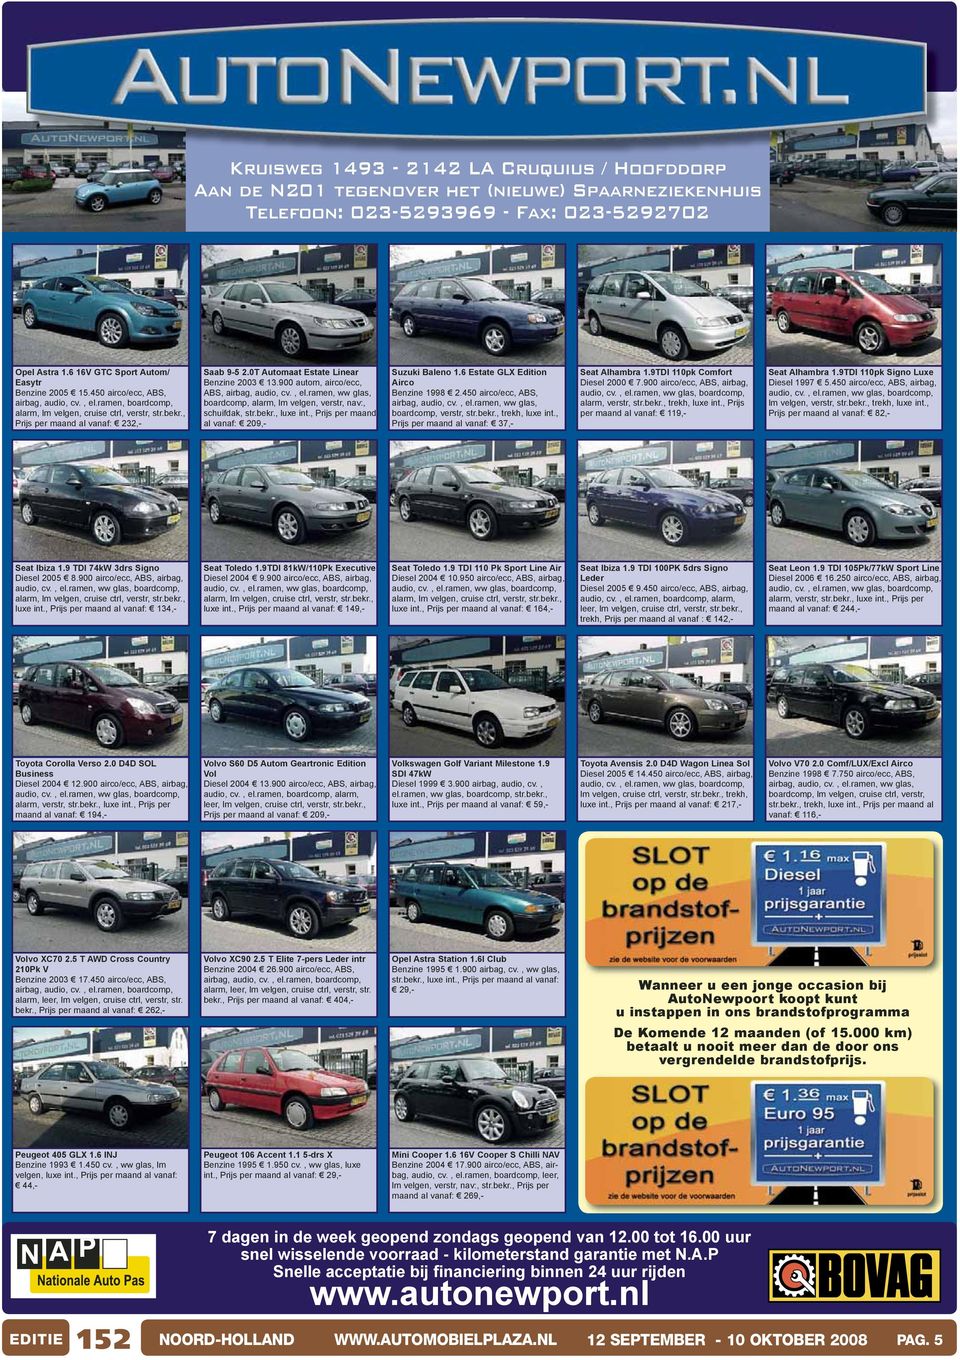 , luxe int., Prijs per maand al vanaf: 209,- Suzuki Baleno 1.6 Estate GLX Edition Airco Benzine 1998 2.450 airco/ecc, ABS, boardcomp, verstr, str.bekr., trekh, luxe int.